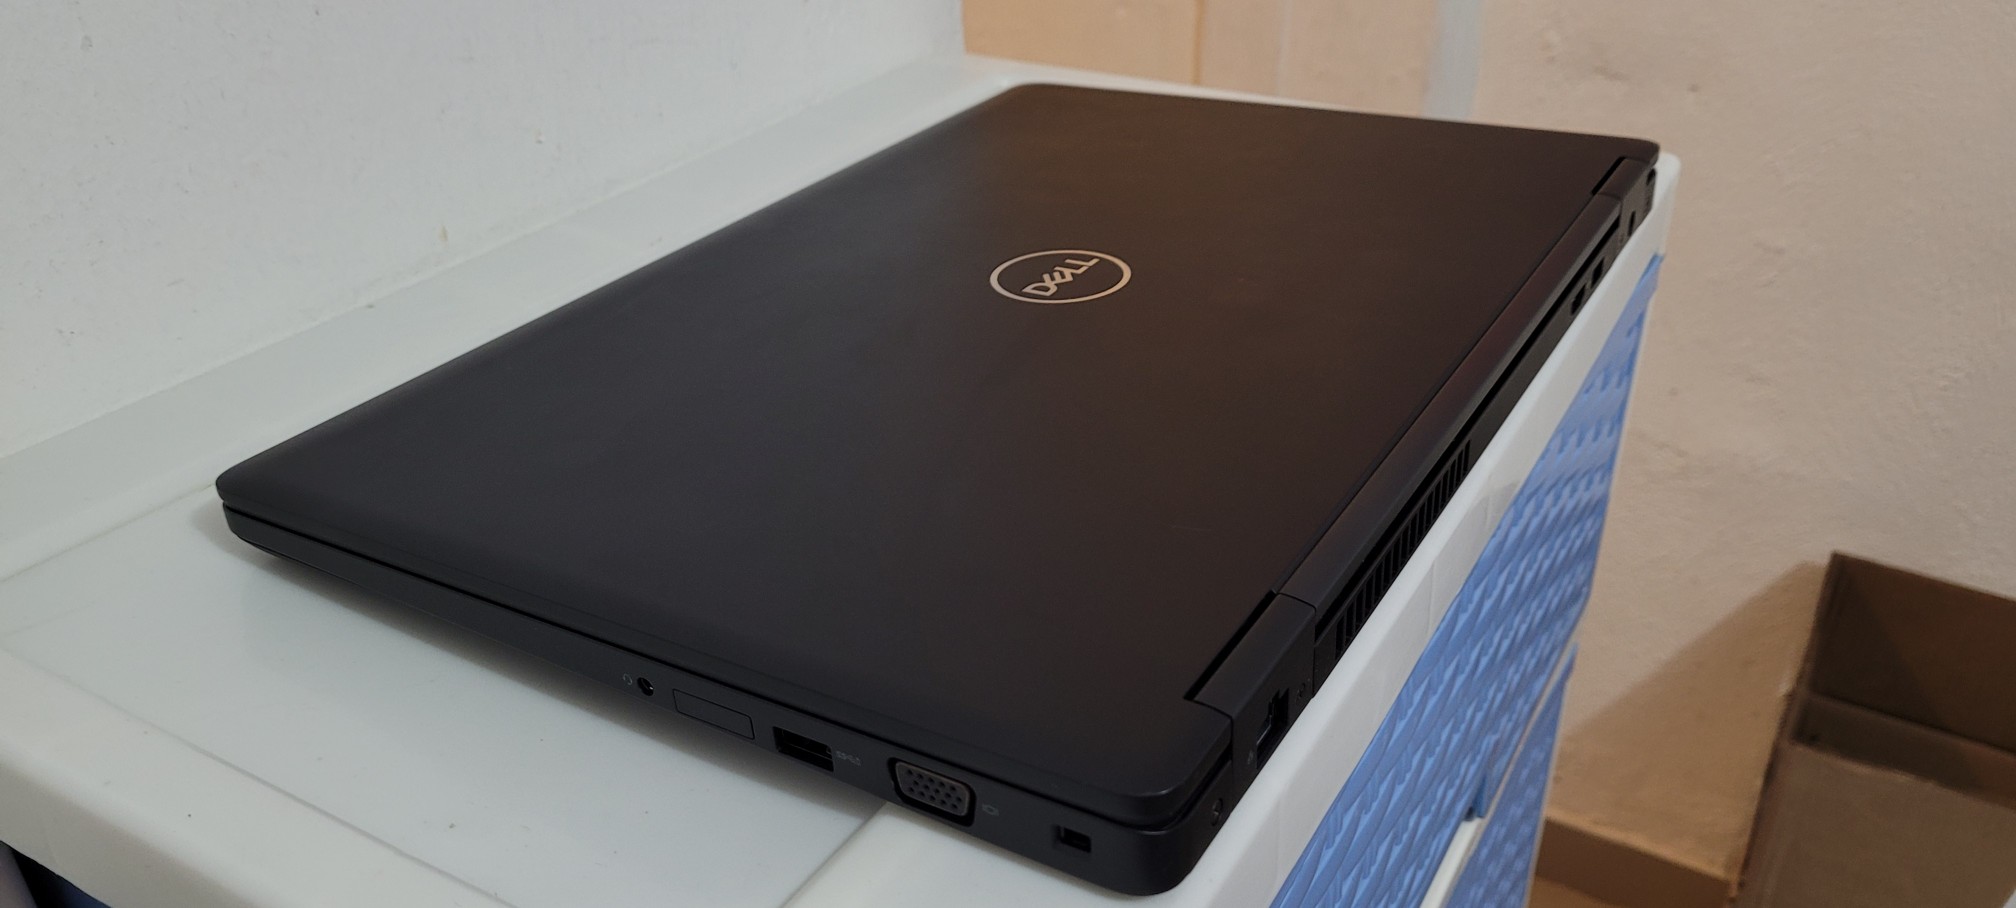 computadoras y laptops - Dell 5470 14 Pulg Core i7 6ta Gen Ram 8gb ddr4 Disco 256gb SSD full 1080p 2